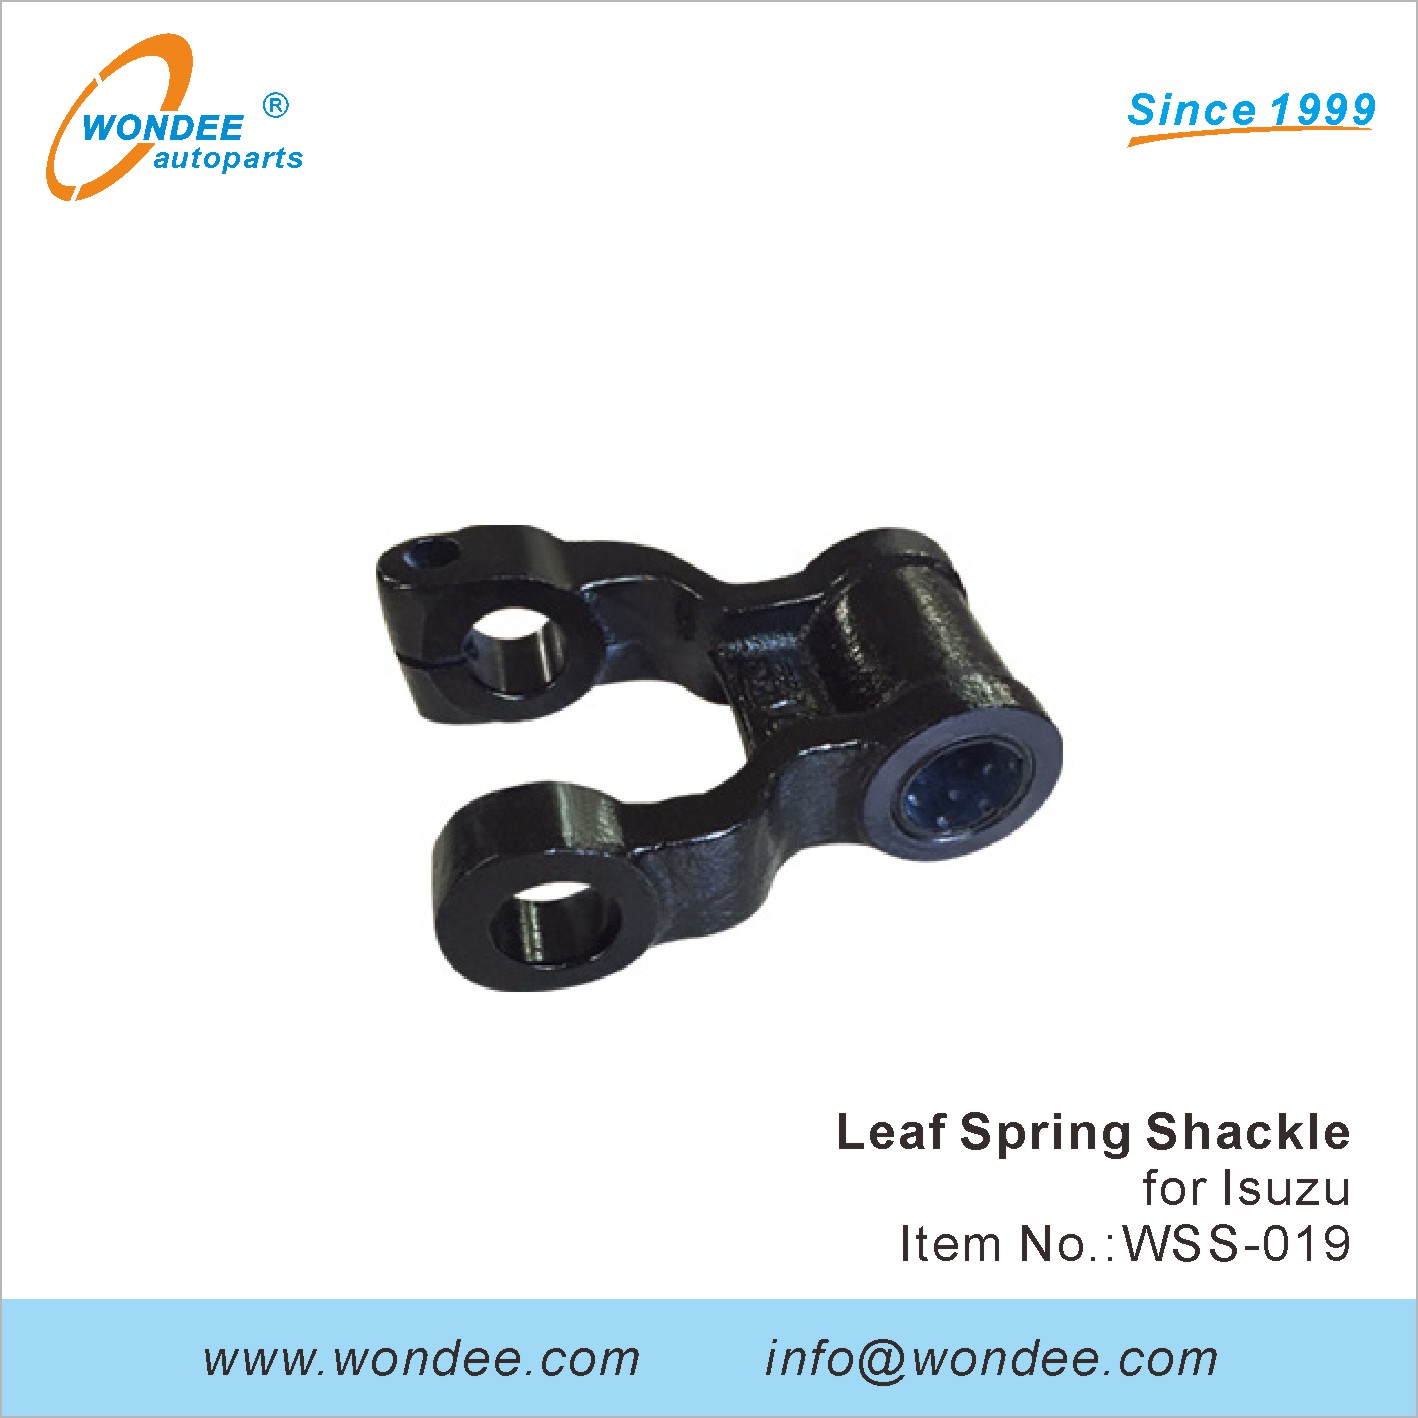 WONDEE leaf spring shackle (19)